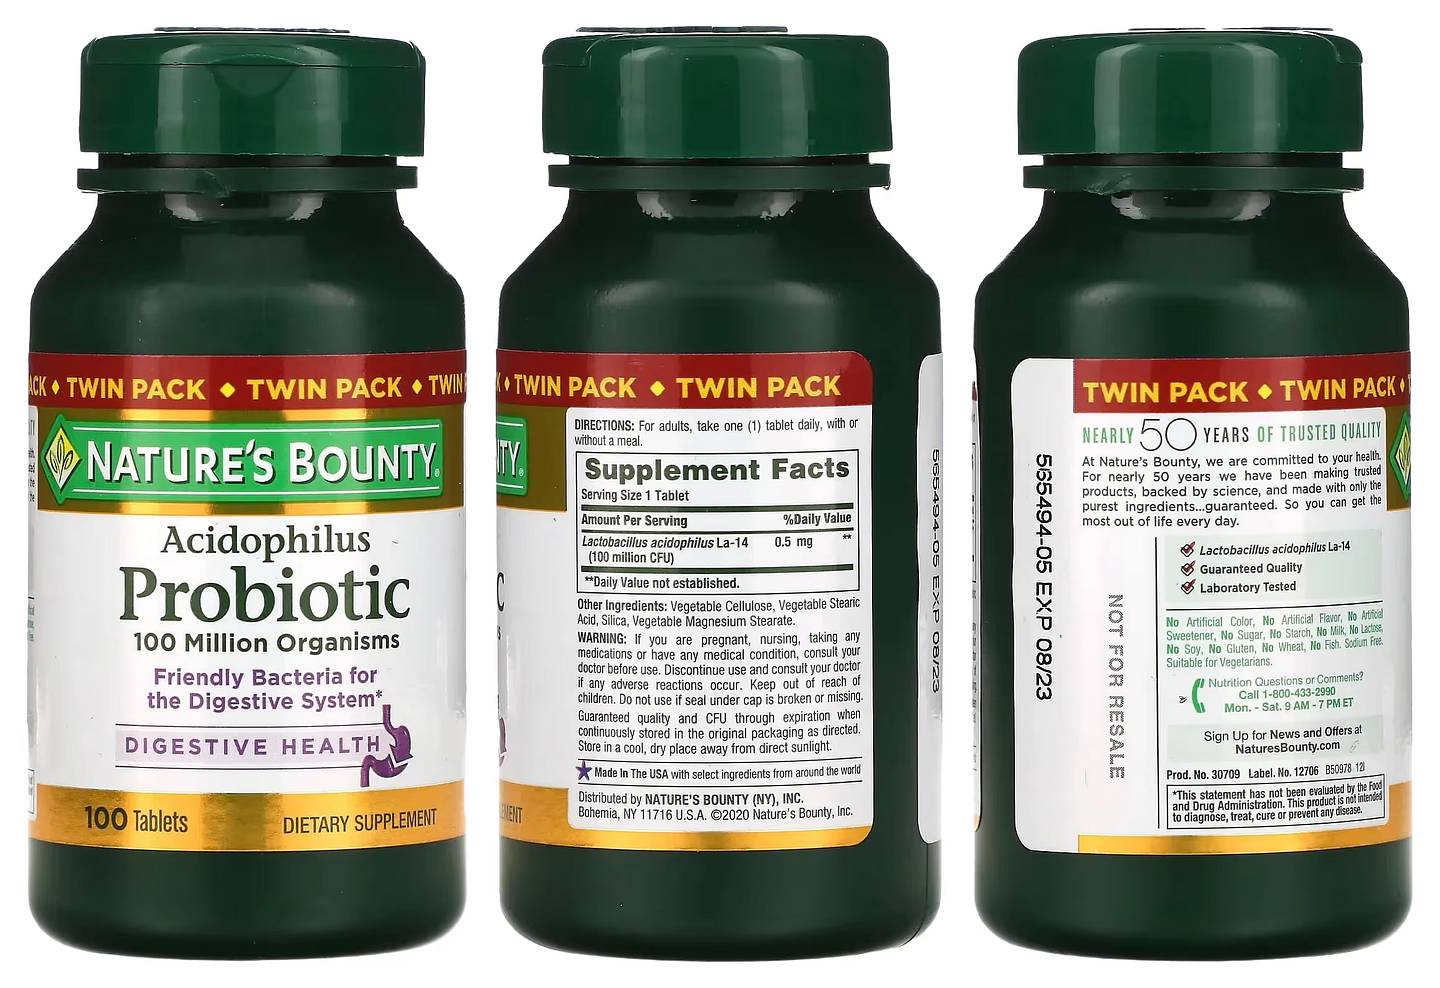 Nature's Bounty, Acidophilus Probiotic packaging